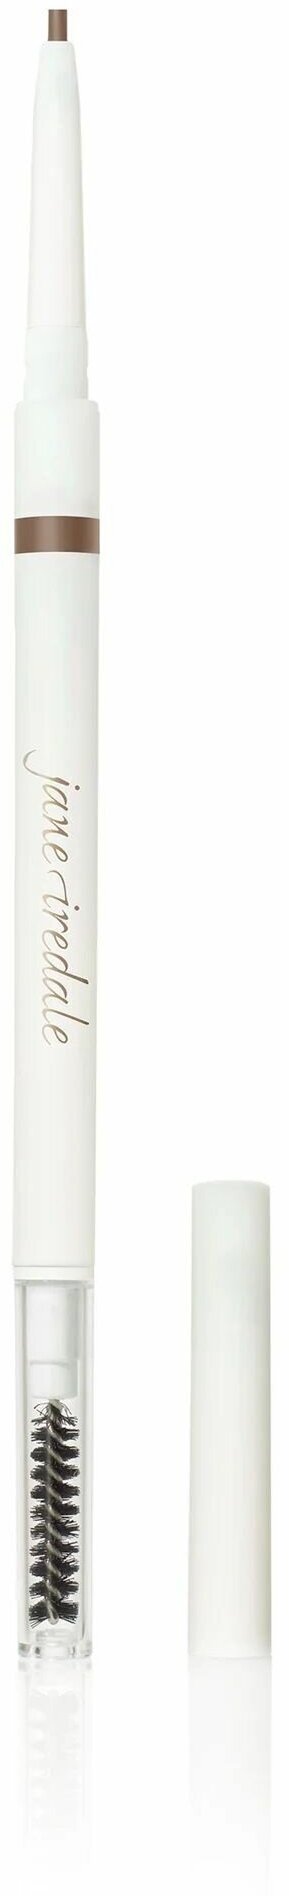 Jane Iredale, Карандаш для бровей с прямым грифелем PureBrow Precision Pencil, цвет: Neutral Blonde